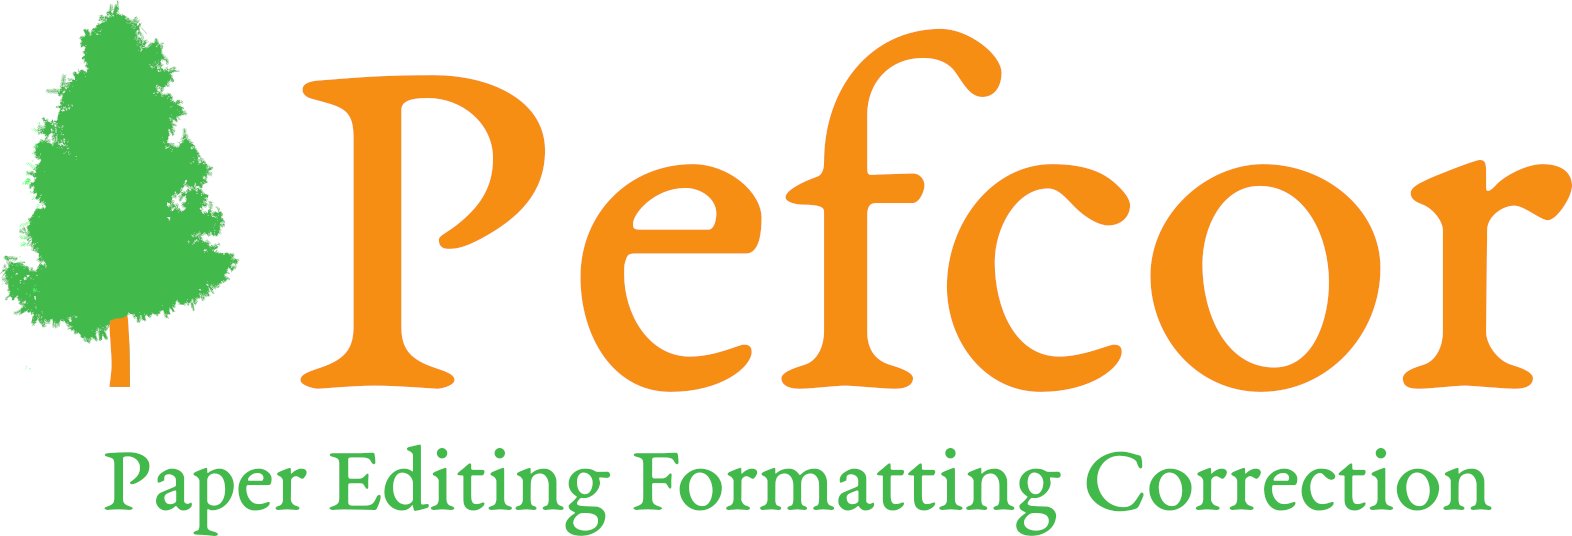 Pefcor: Paper Editing Formatting Correction